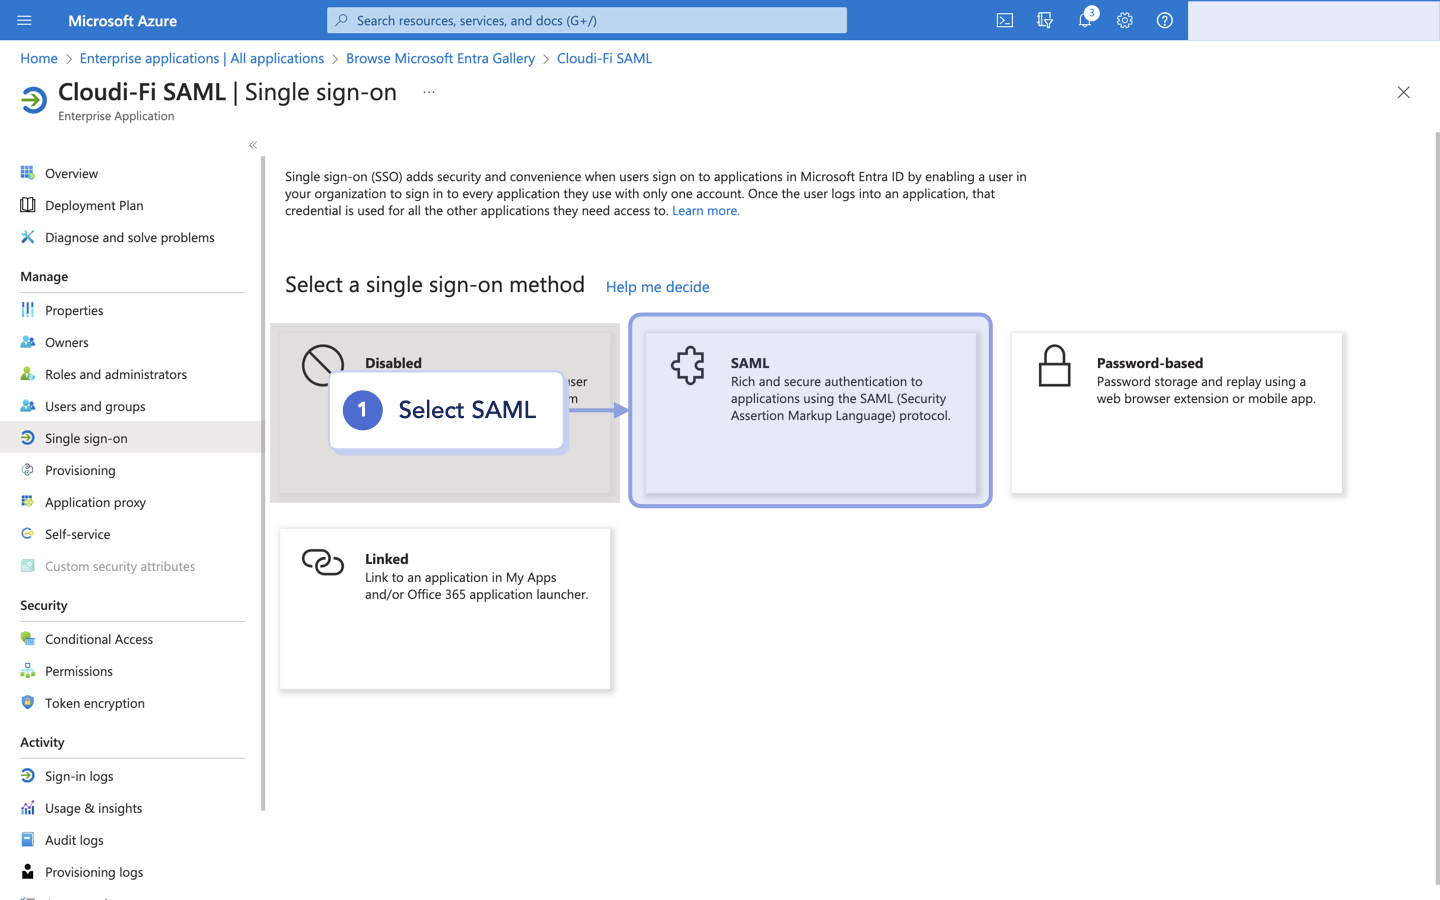 Azure UI - Select SAML as Single Sign-On for Cloudi-Fi.jpeg